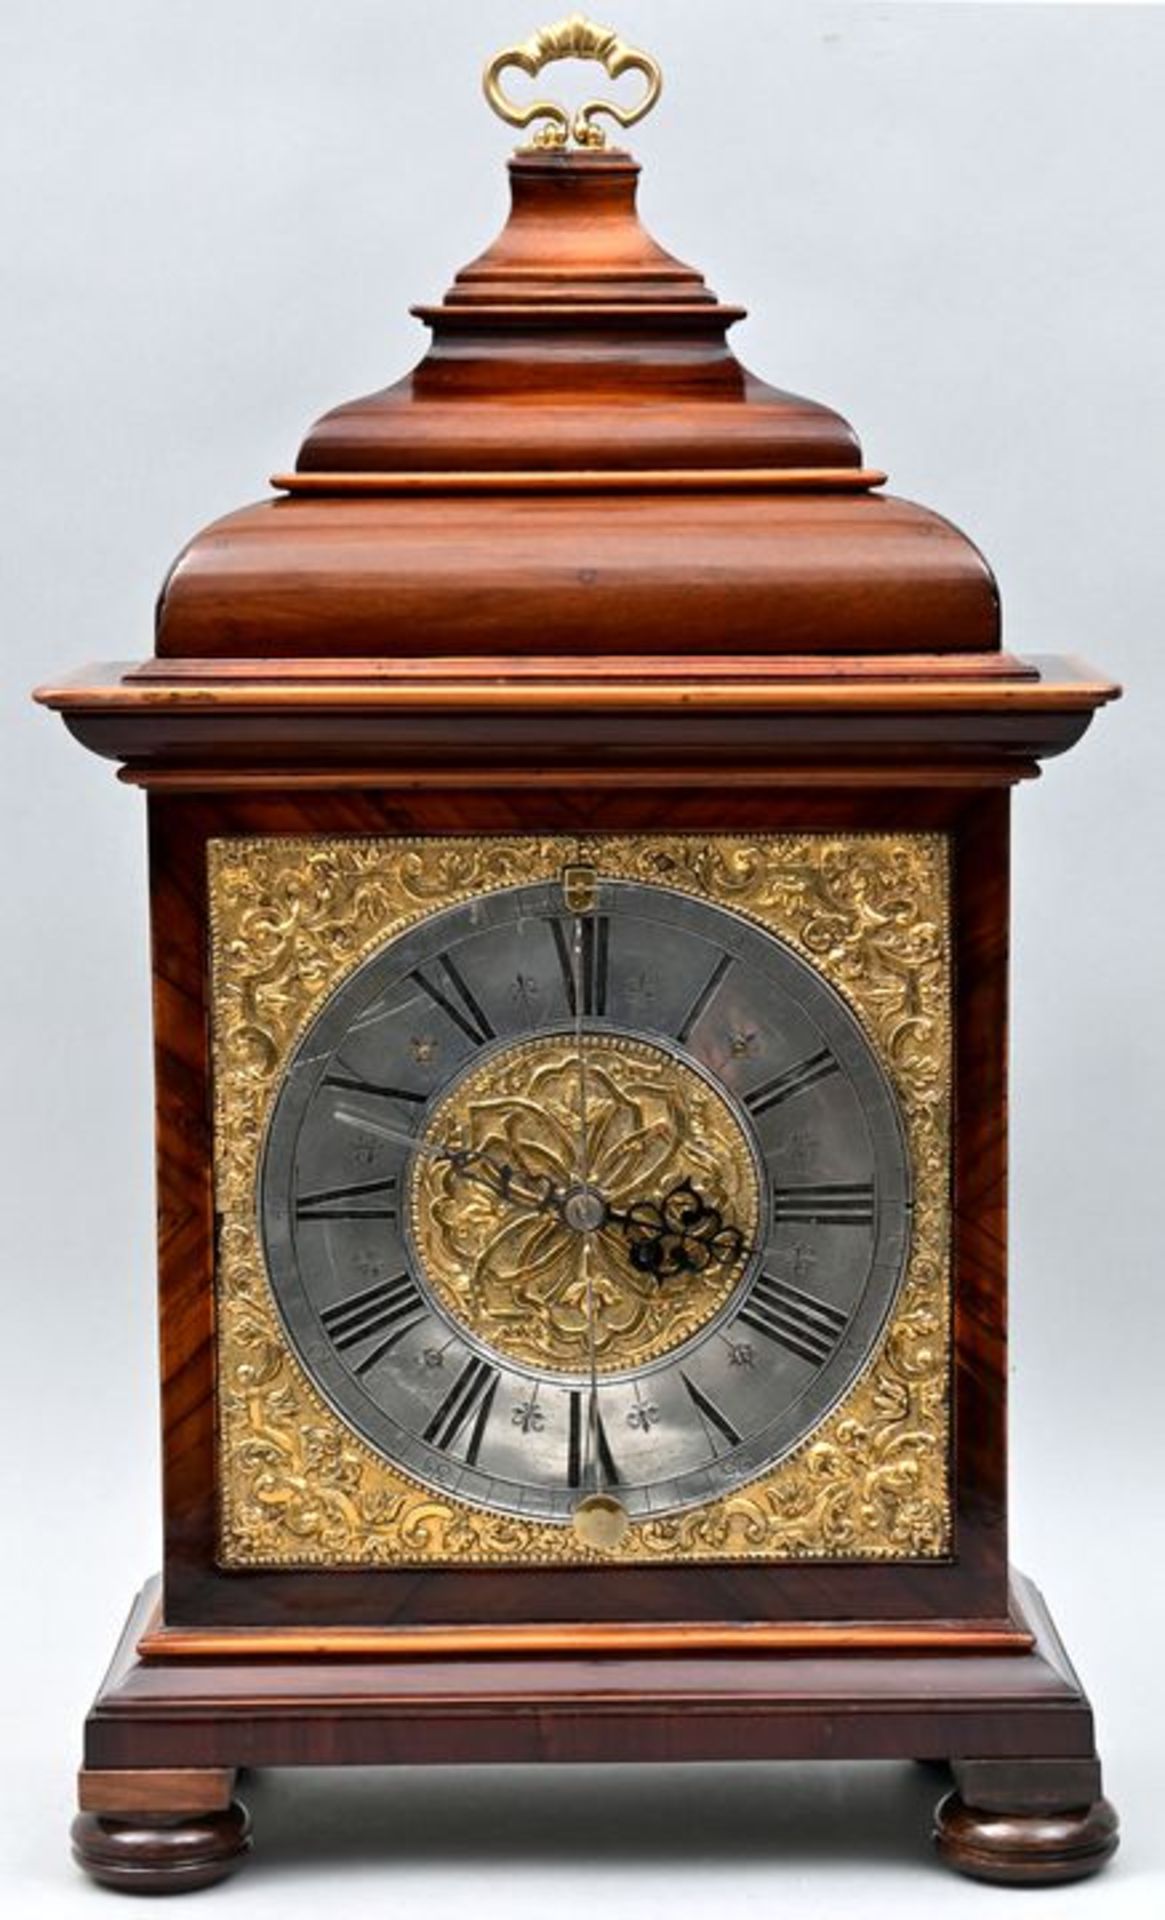 972 Stockuhr, Vorderpendel / Bracket clock